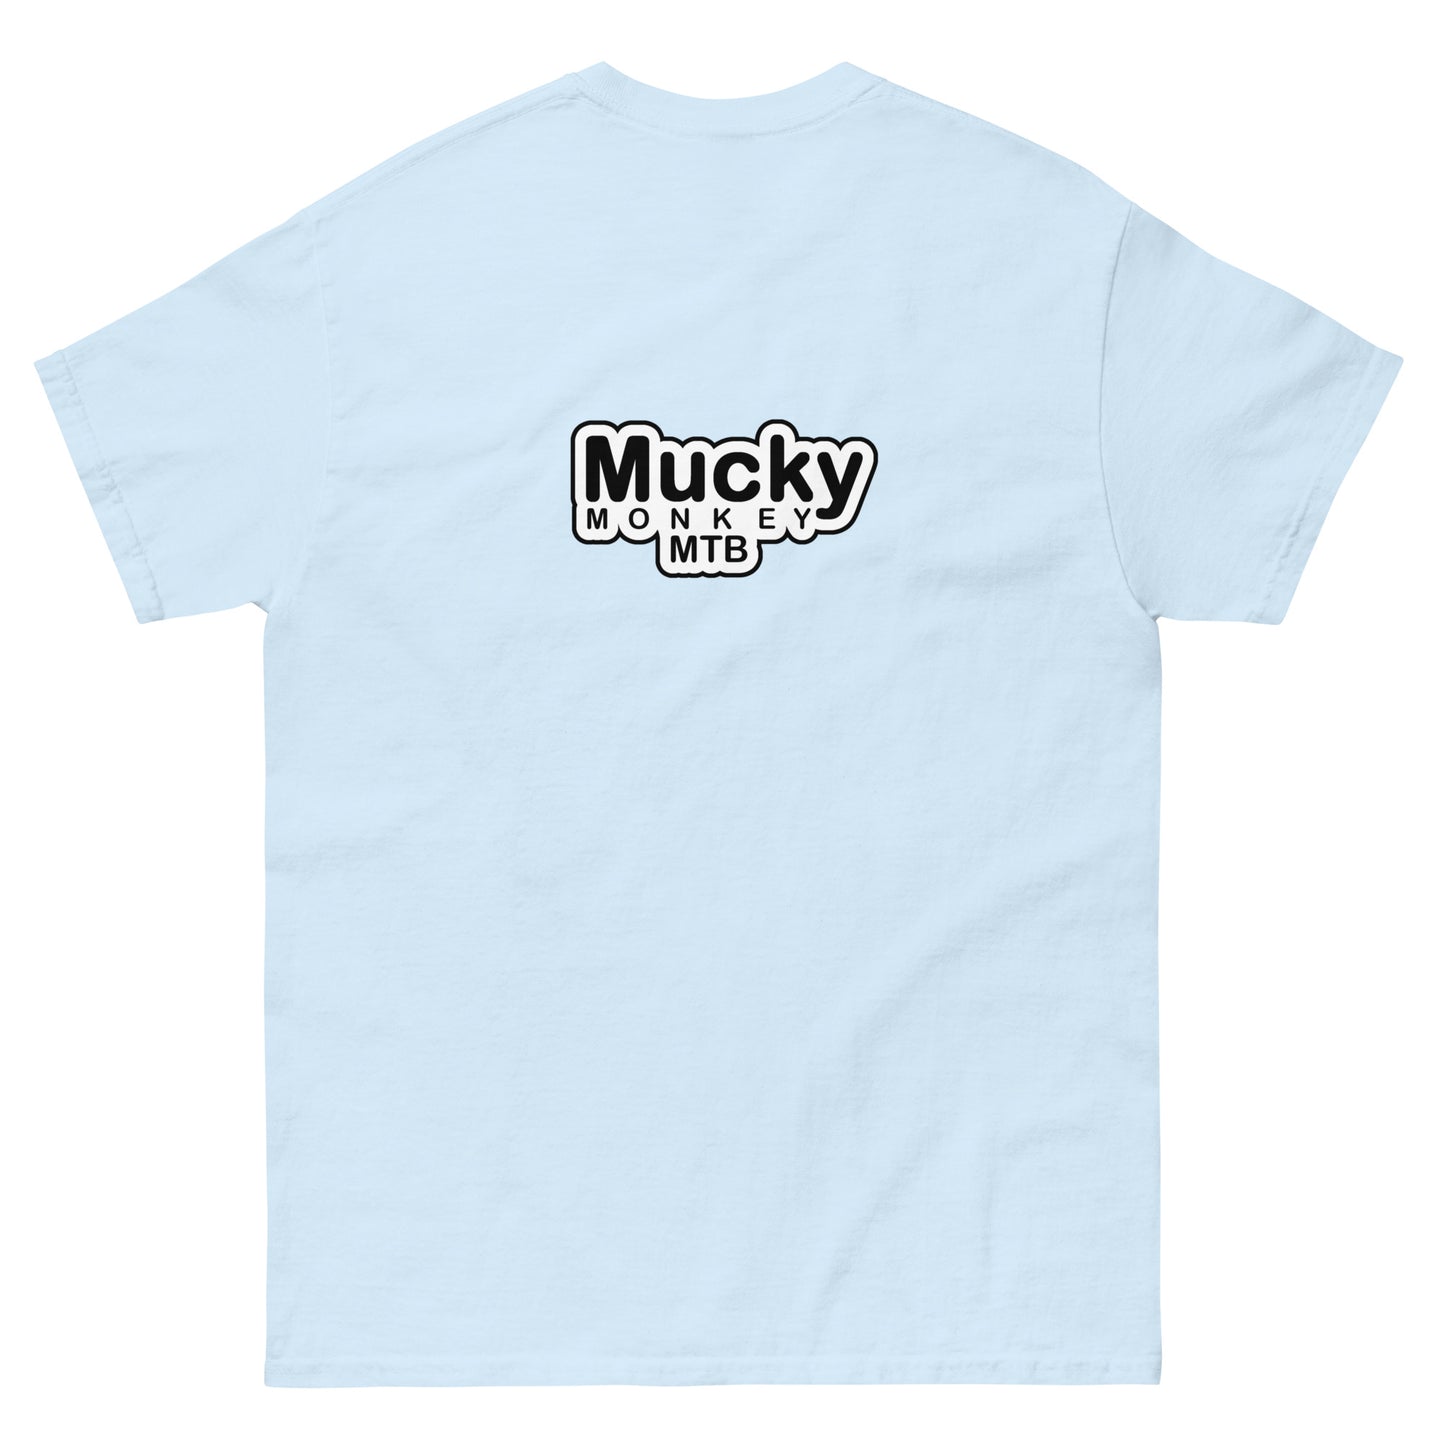 Mucky Monkey - Tee 2nd Edition